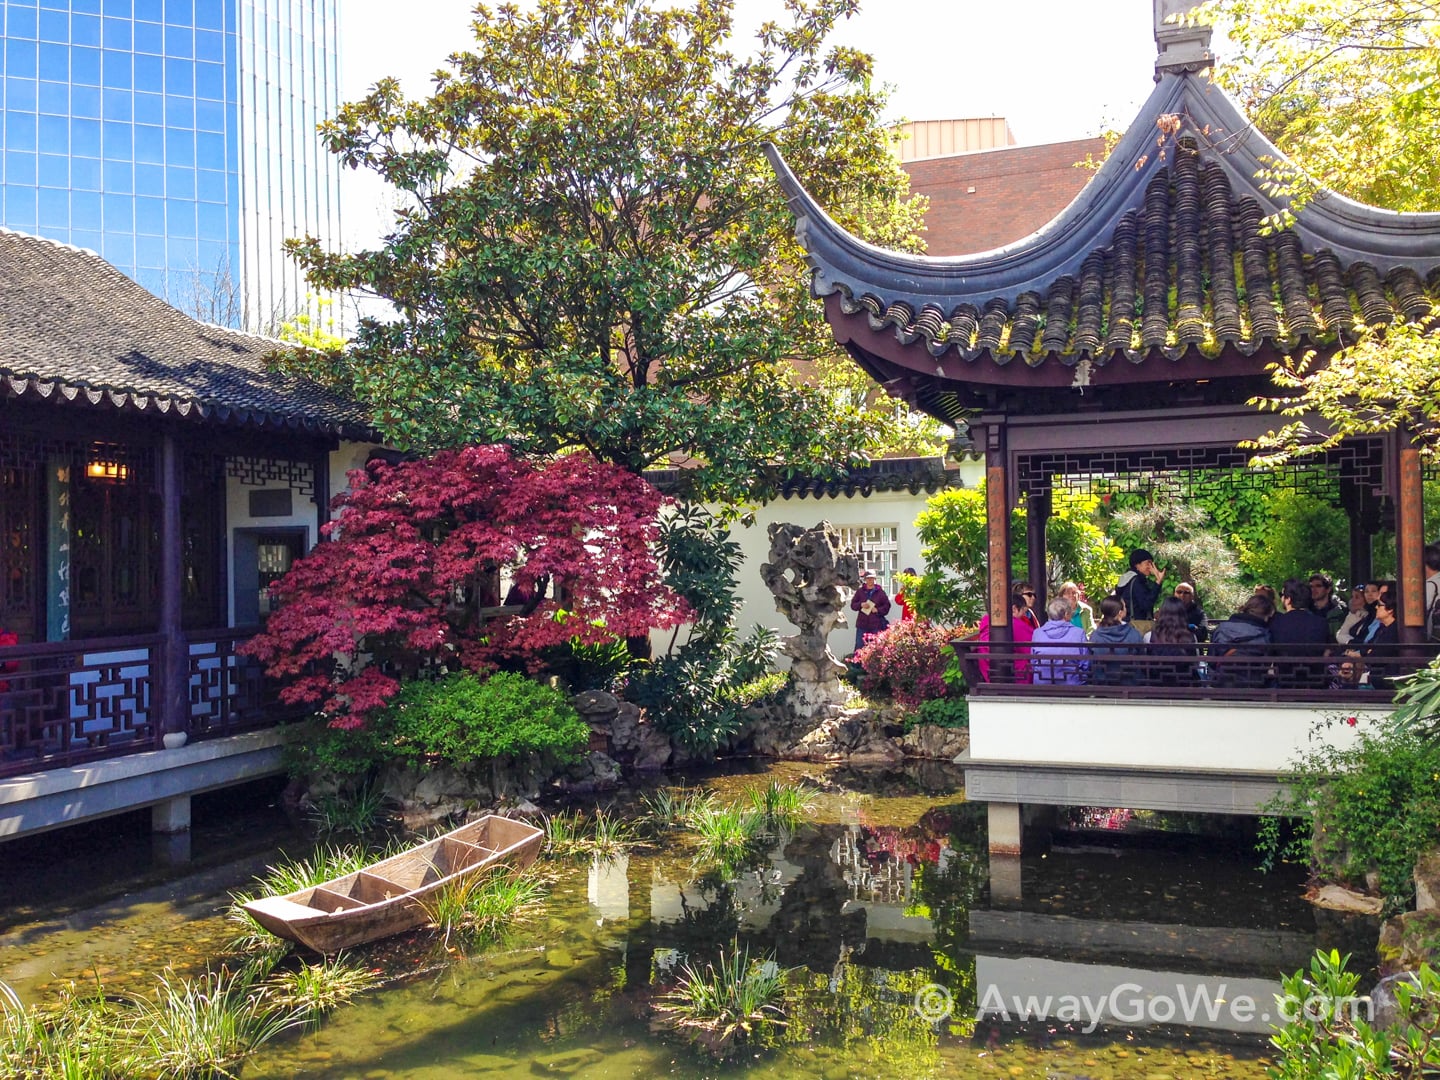 Knowing the Fish Pavilion on Lake Zither at Lan Su Chinese Garden